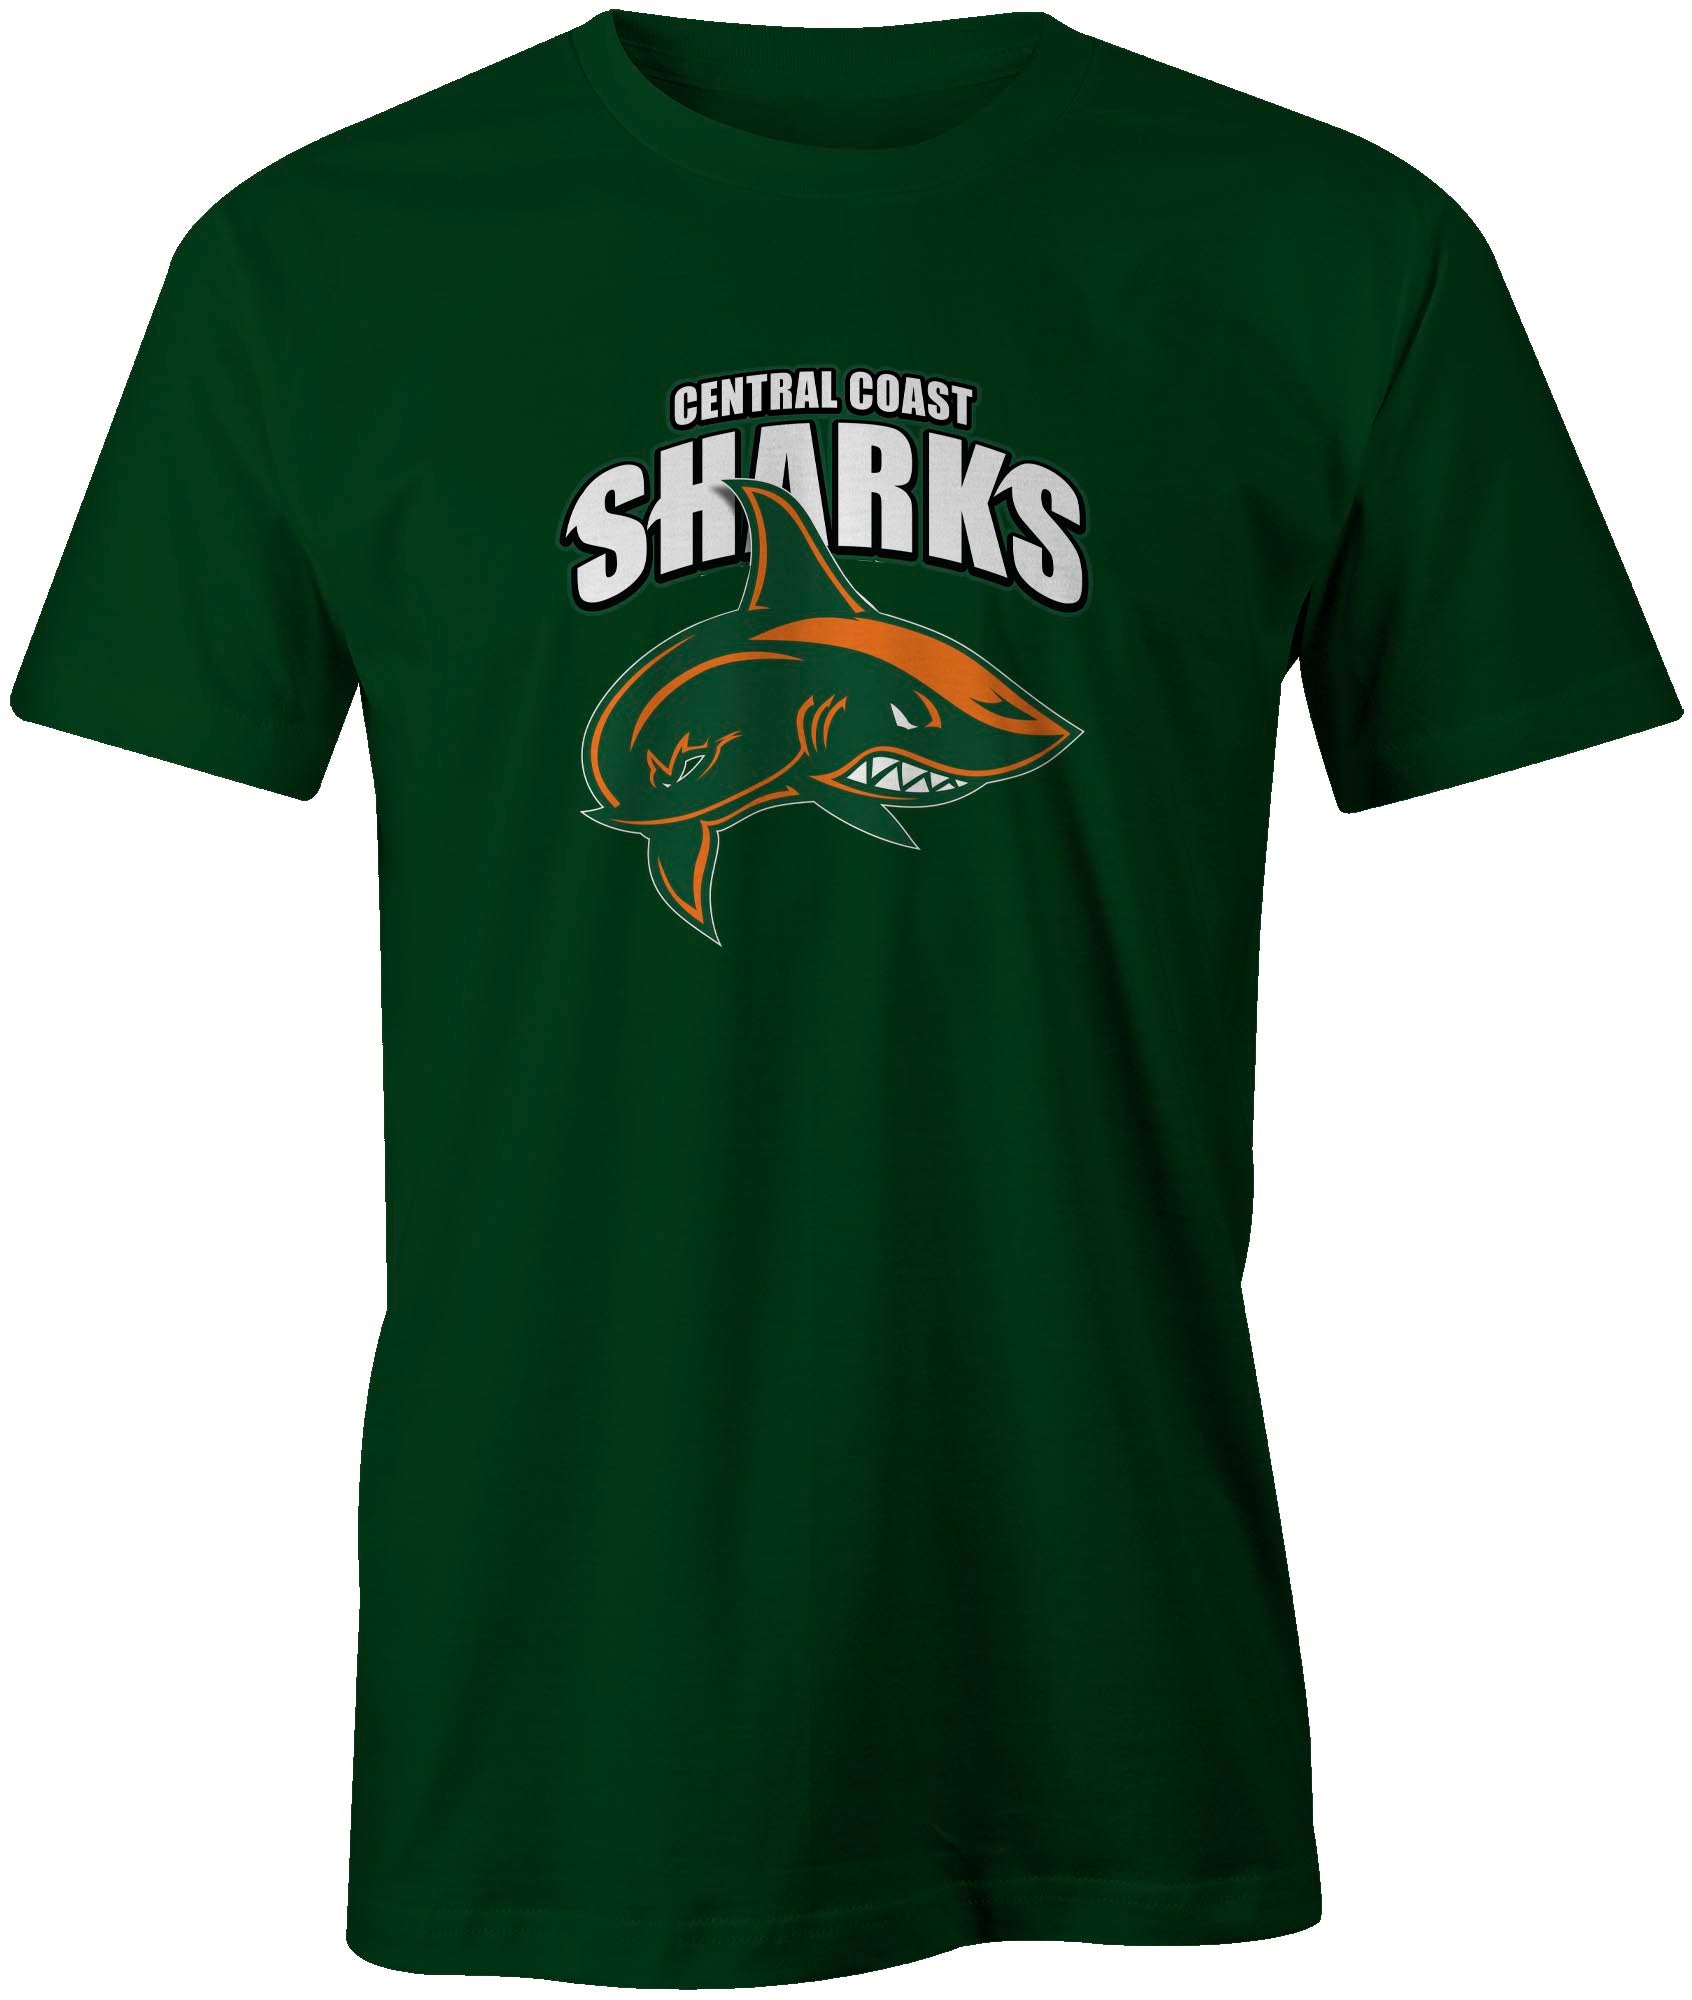 Central Coast Sharks Official Logo T-Shirt